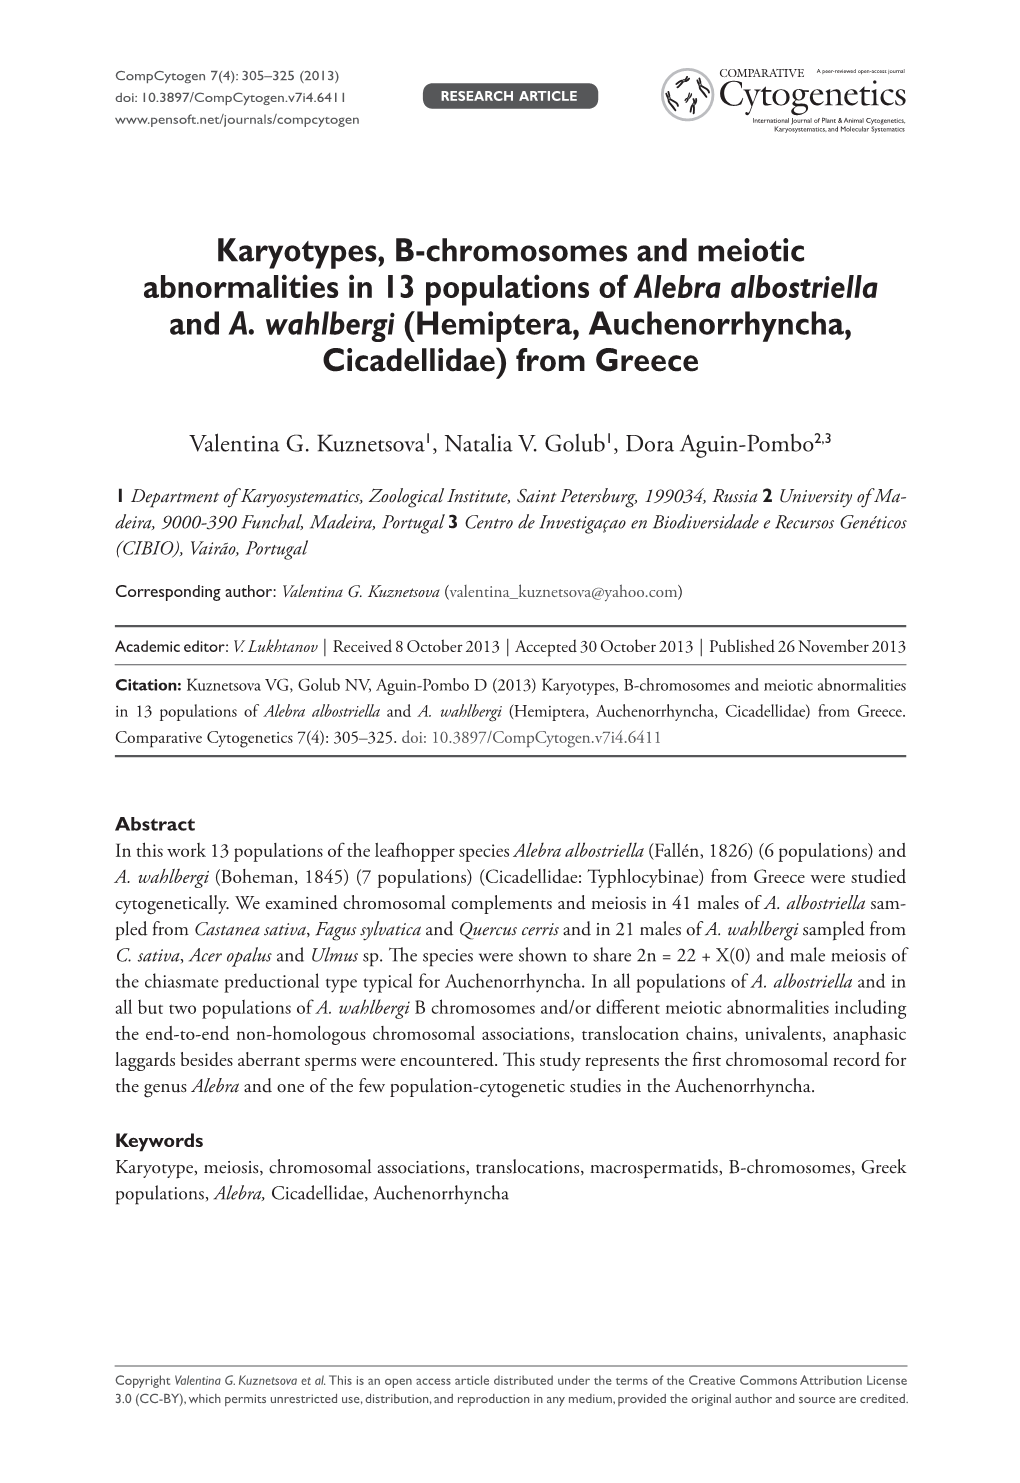 Karyotypes, B-Chromosomes and Meiotic Abnormalities in 13 Populations of Alebra Albostriella and A. Wahlbergi (Hemiptera, Auchenorrhyncha, Cicadellidae) from Greece